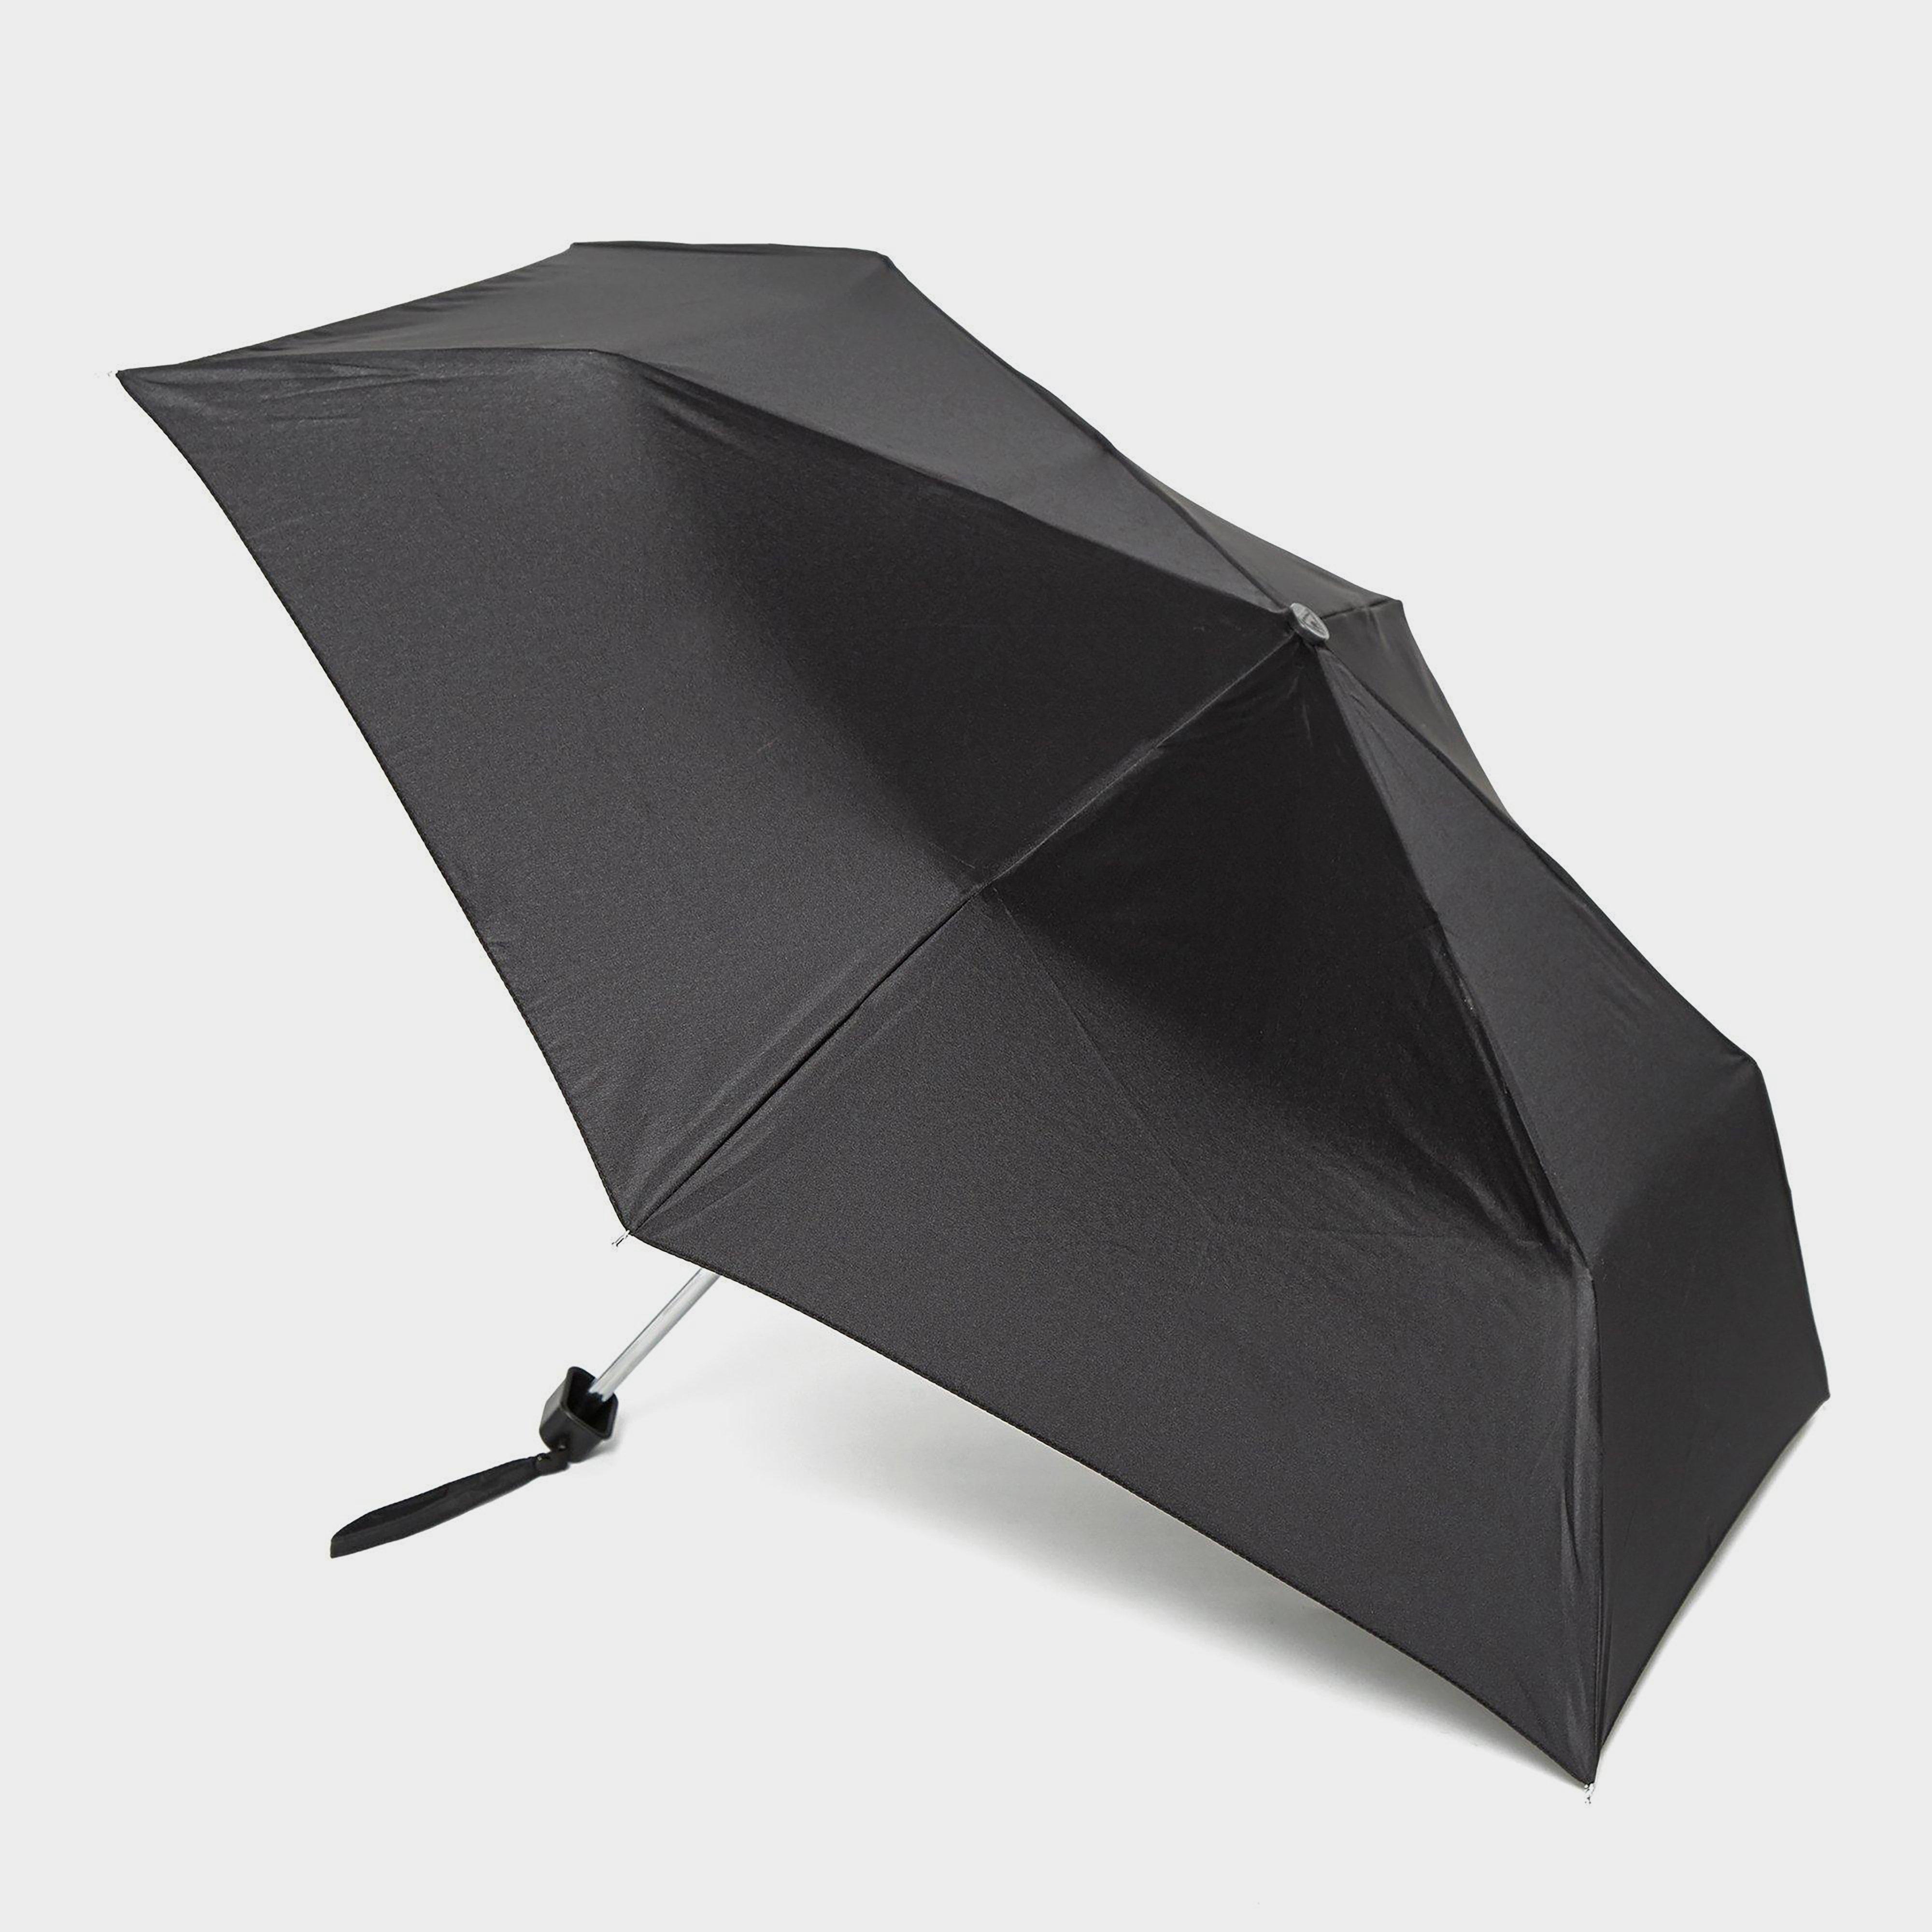 Mini-Flat 1 Umbrella - Black, Black